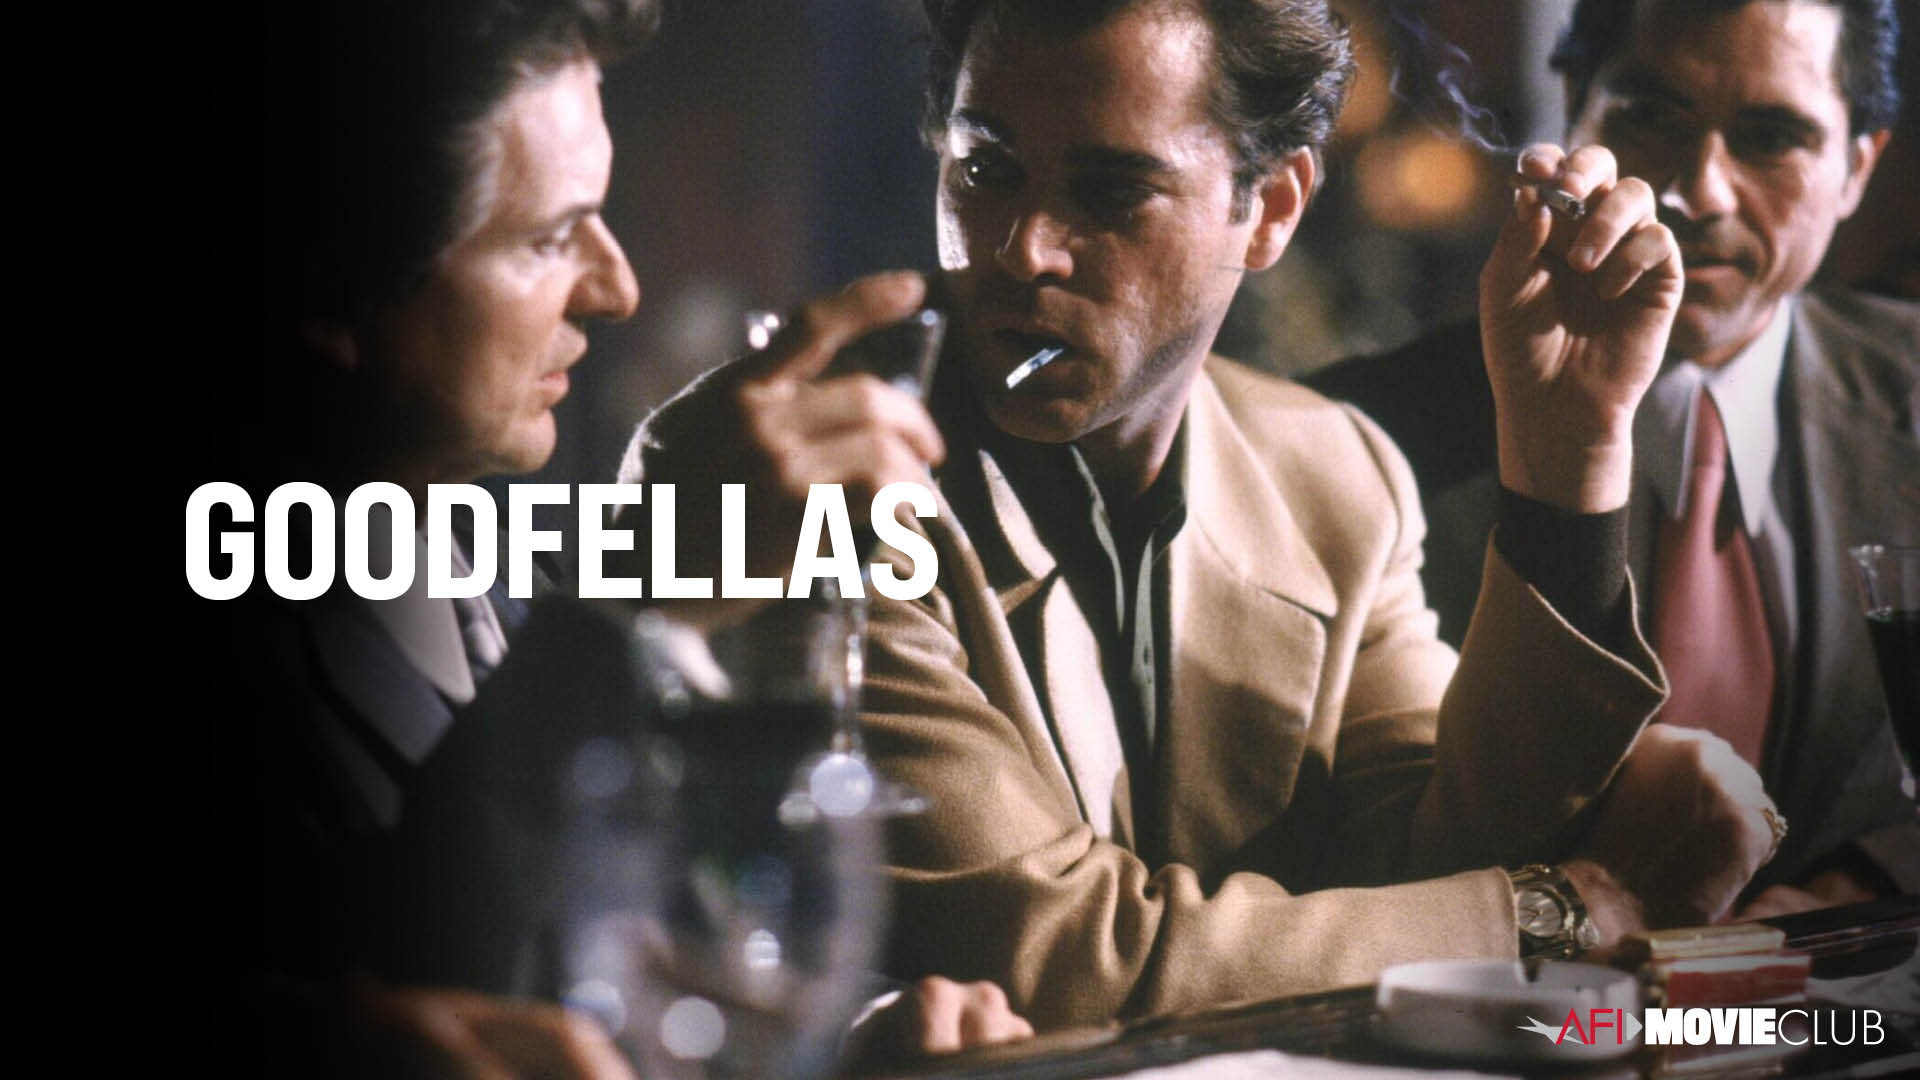 Goodfellas Film Still - Ray Liotta, Joe Pesci, and Joseph Bono